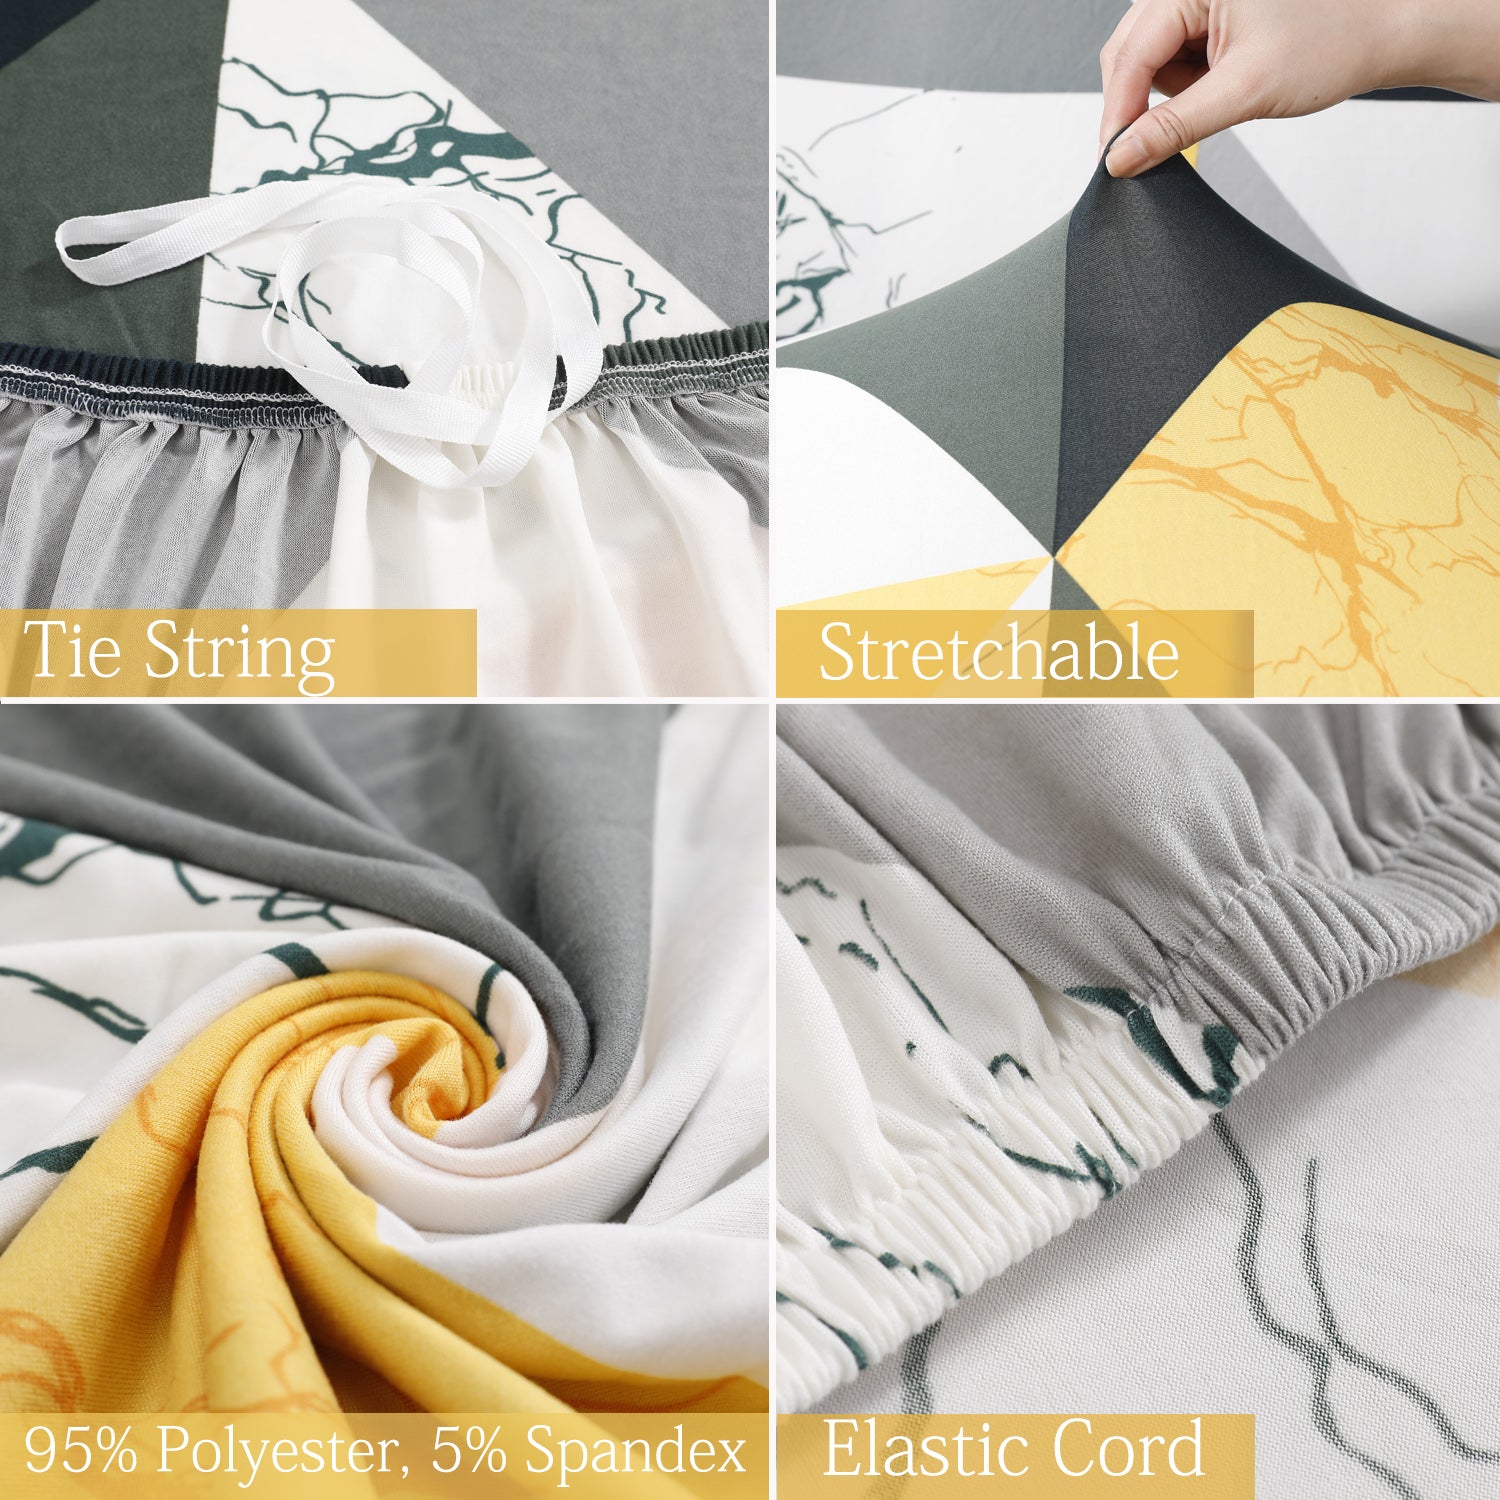 Elastic Stretchable Printed Sofa Cover, Geometric Print